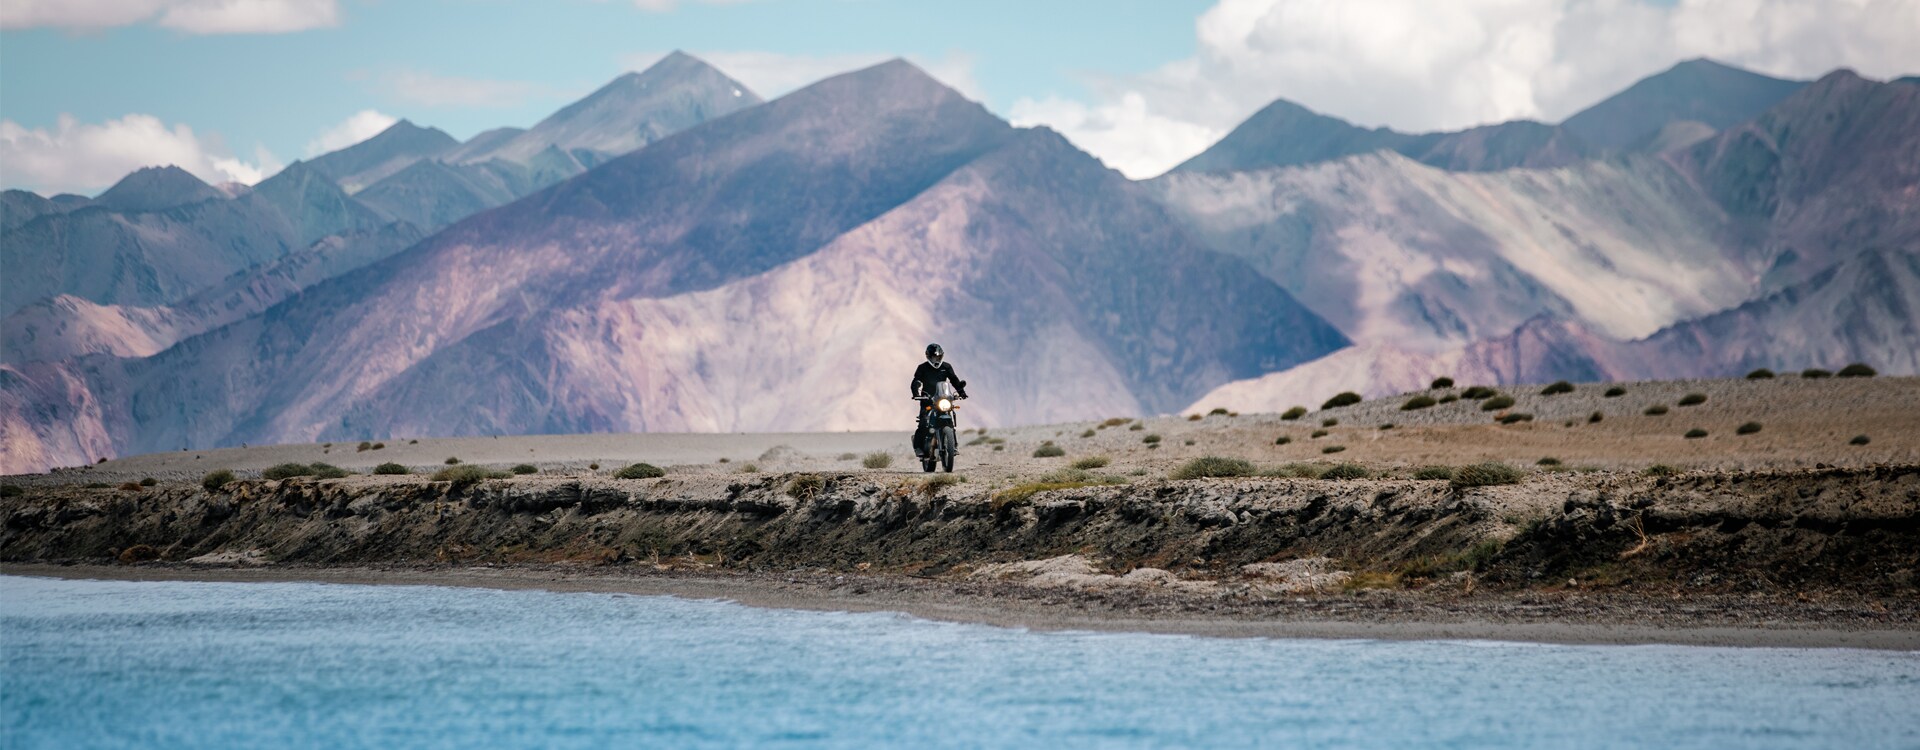 Himalayan 410 - Ready for adventure Bike